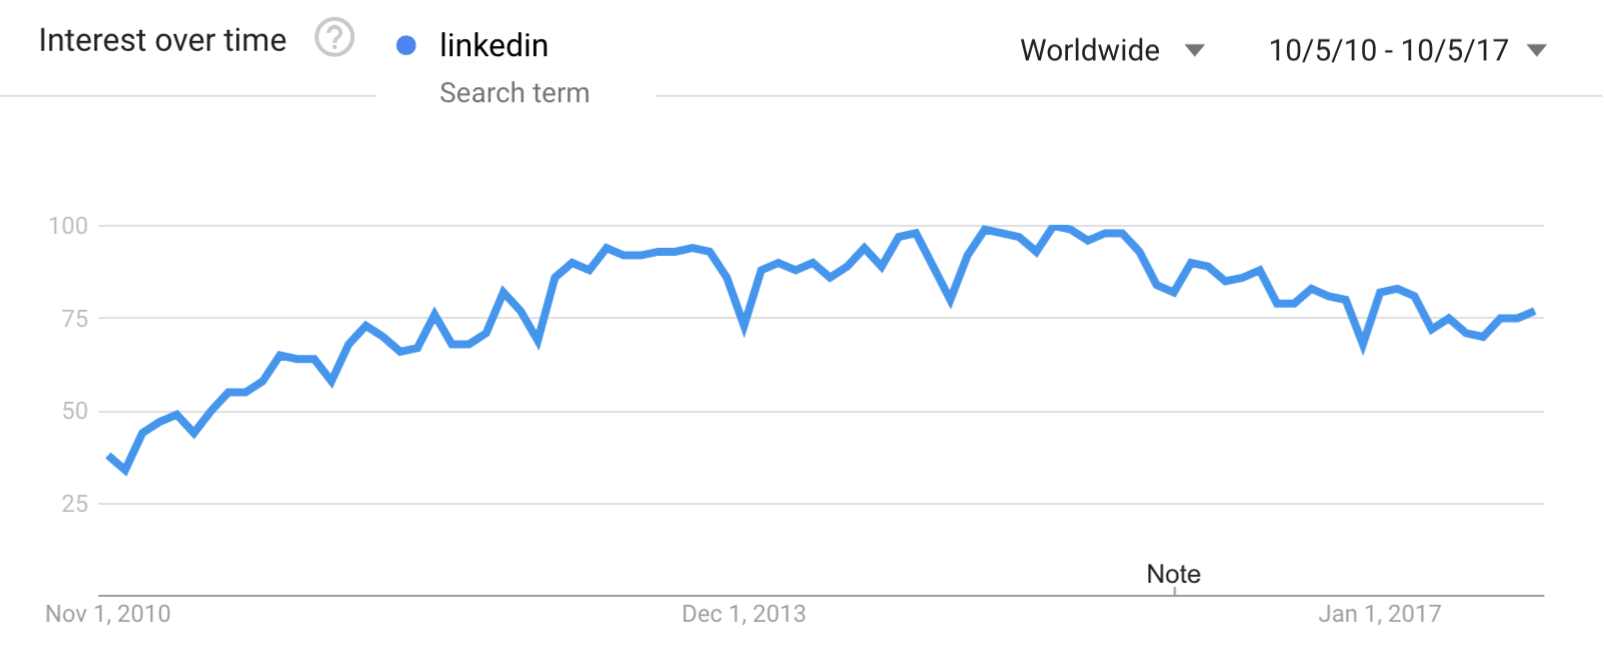 Google Search Trends - LinkedIn